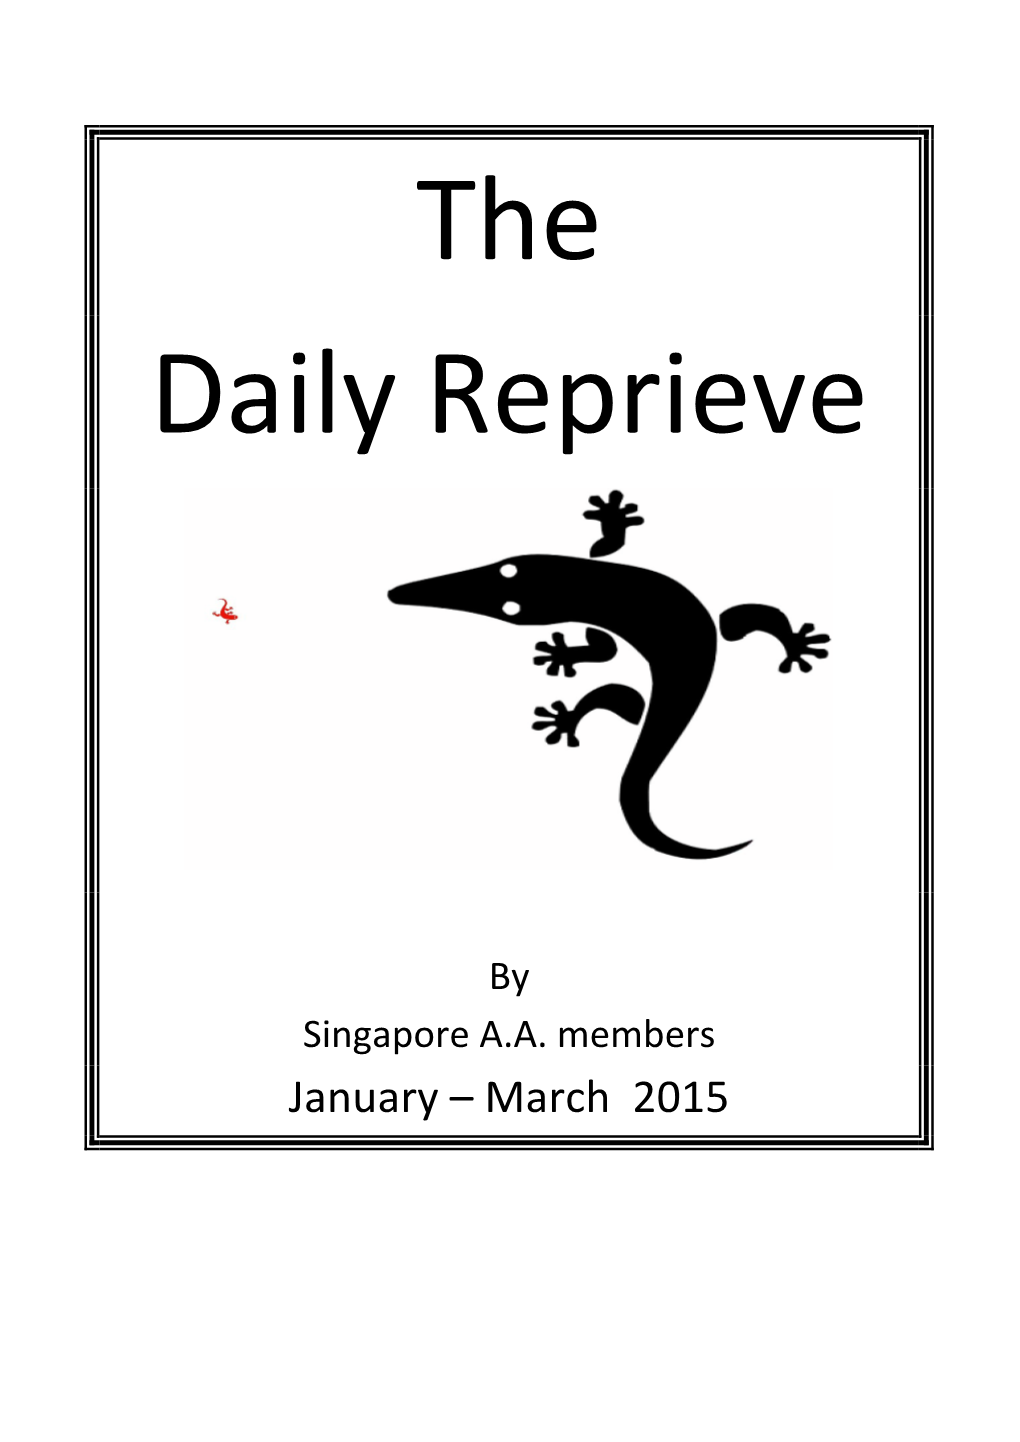 The Daily Reprieve